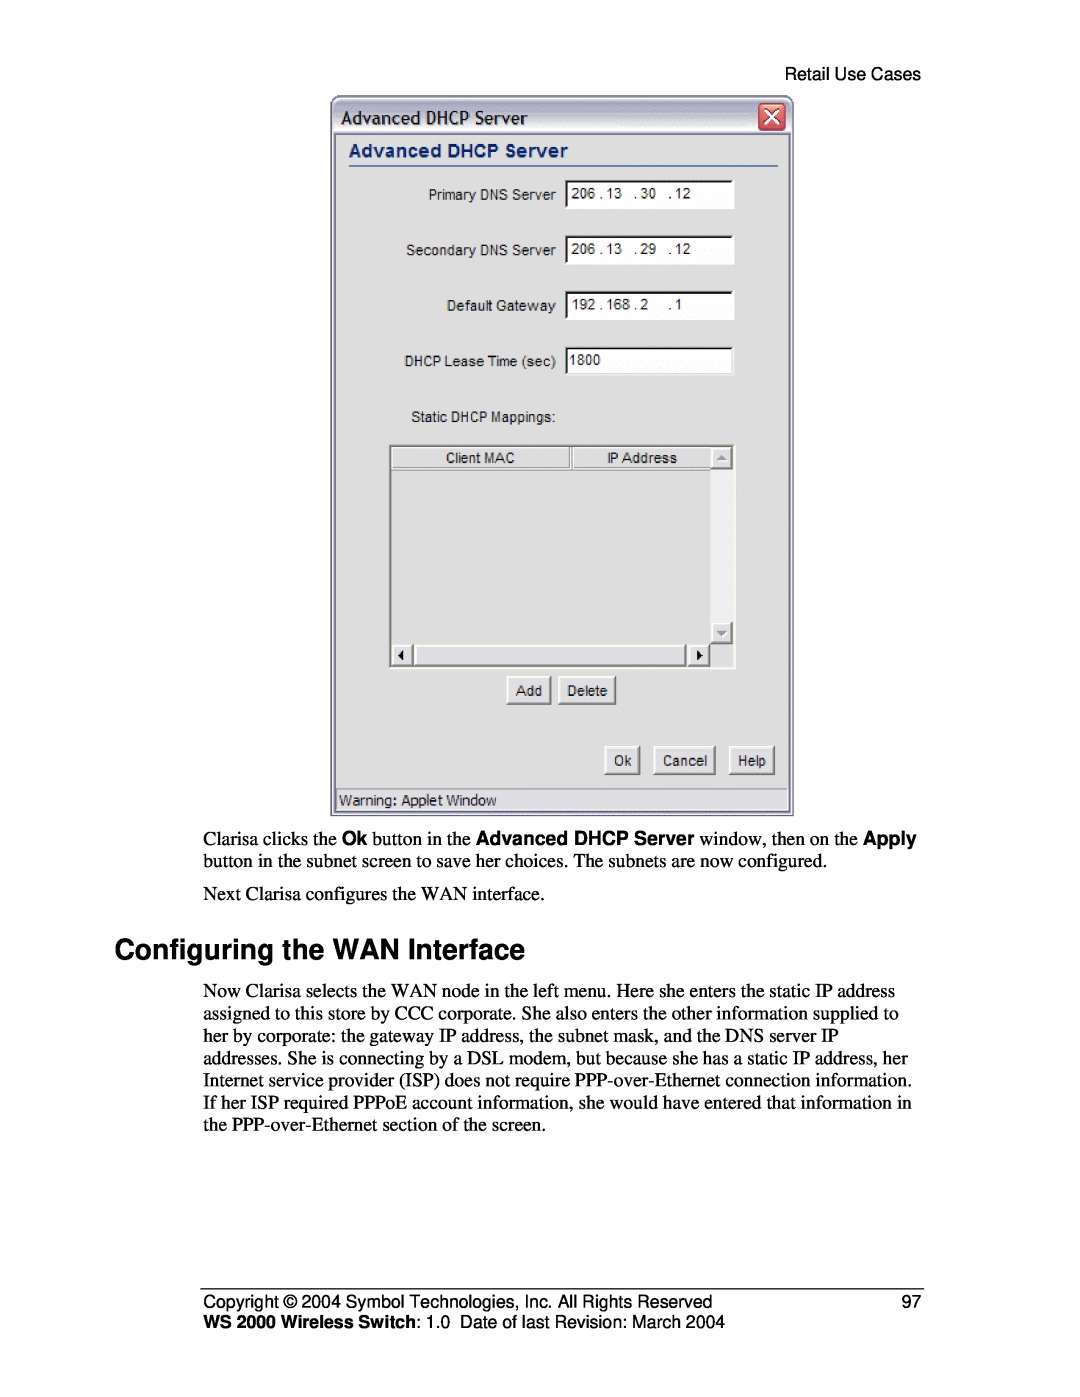 Symbol Technologies WS 2000 manual Configuring the WAN Interface 